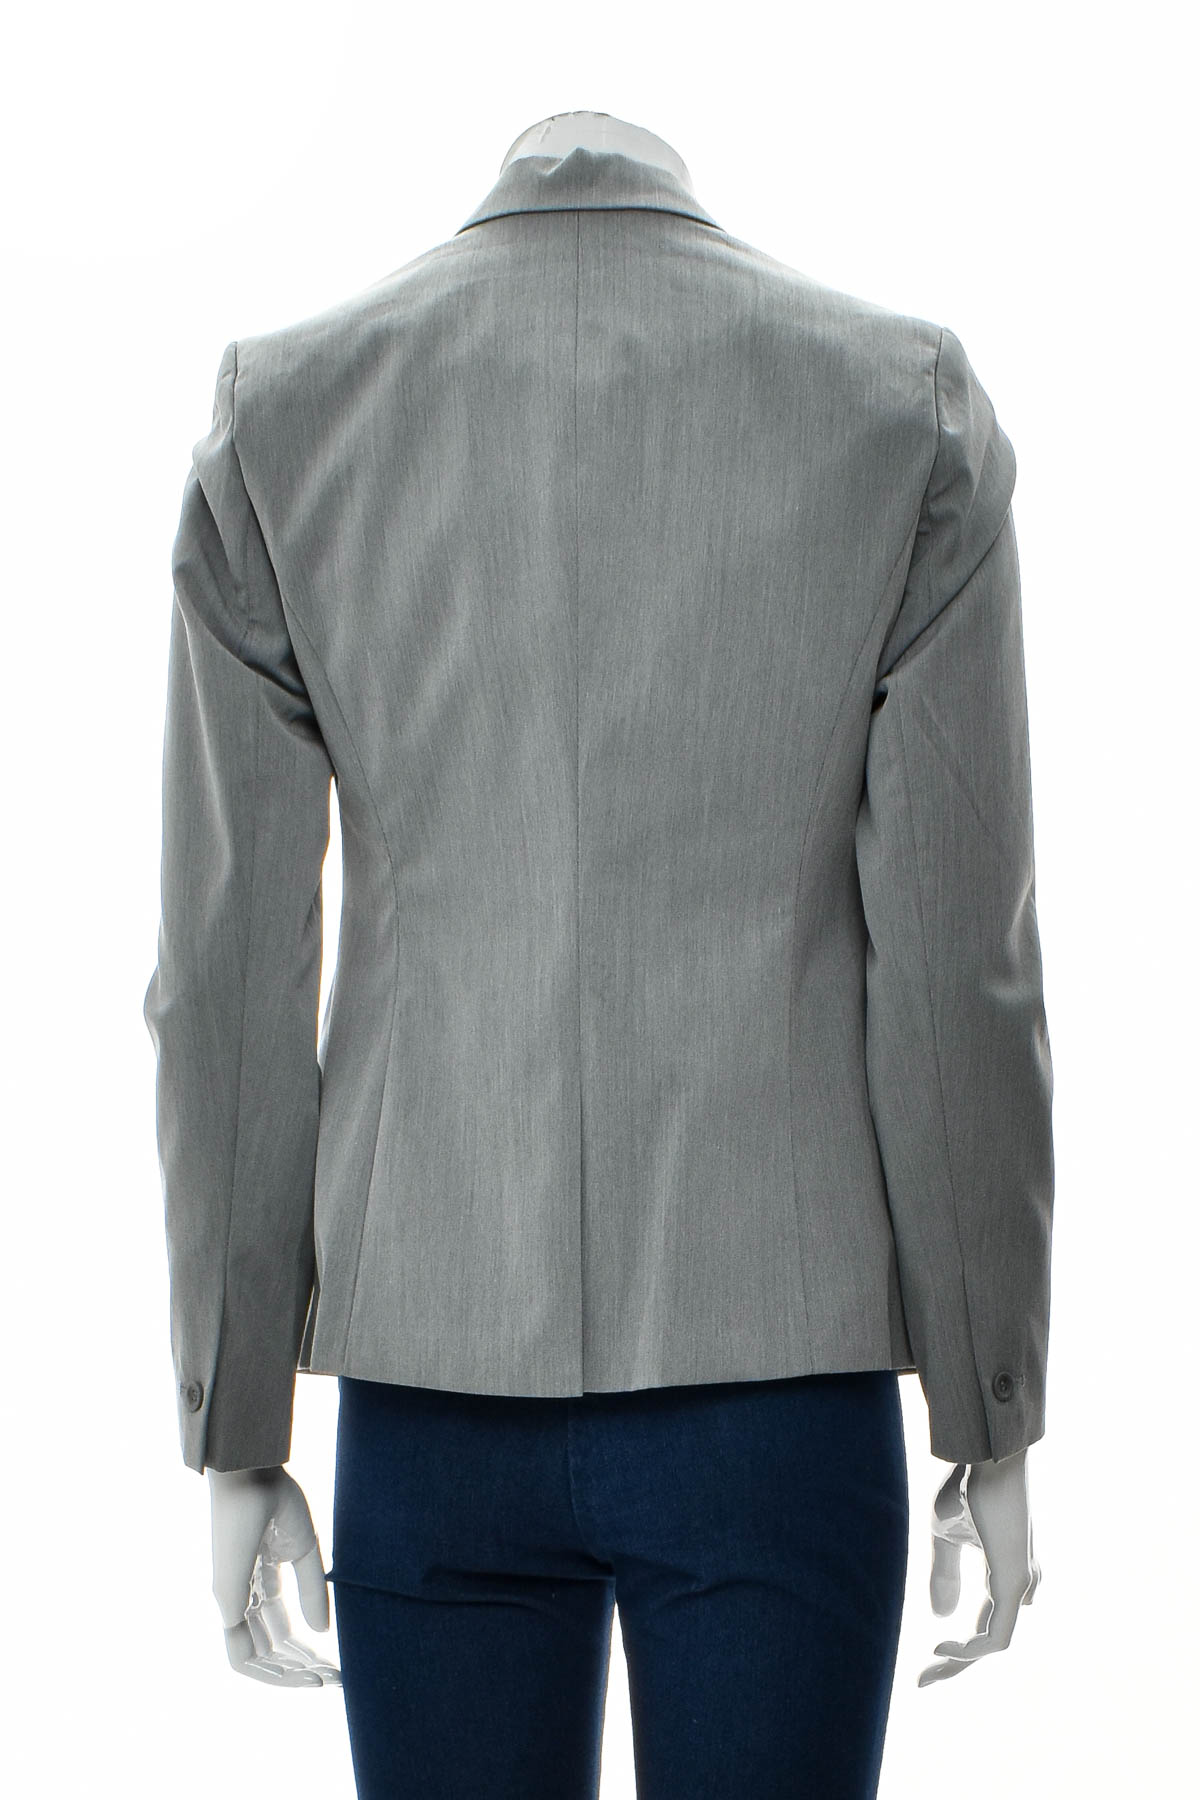 Women's blazer - Target Collection - 1